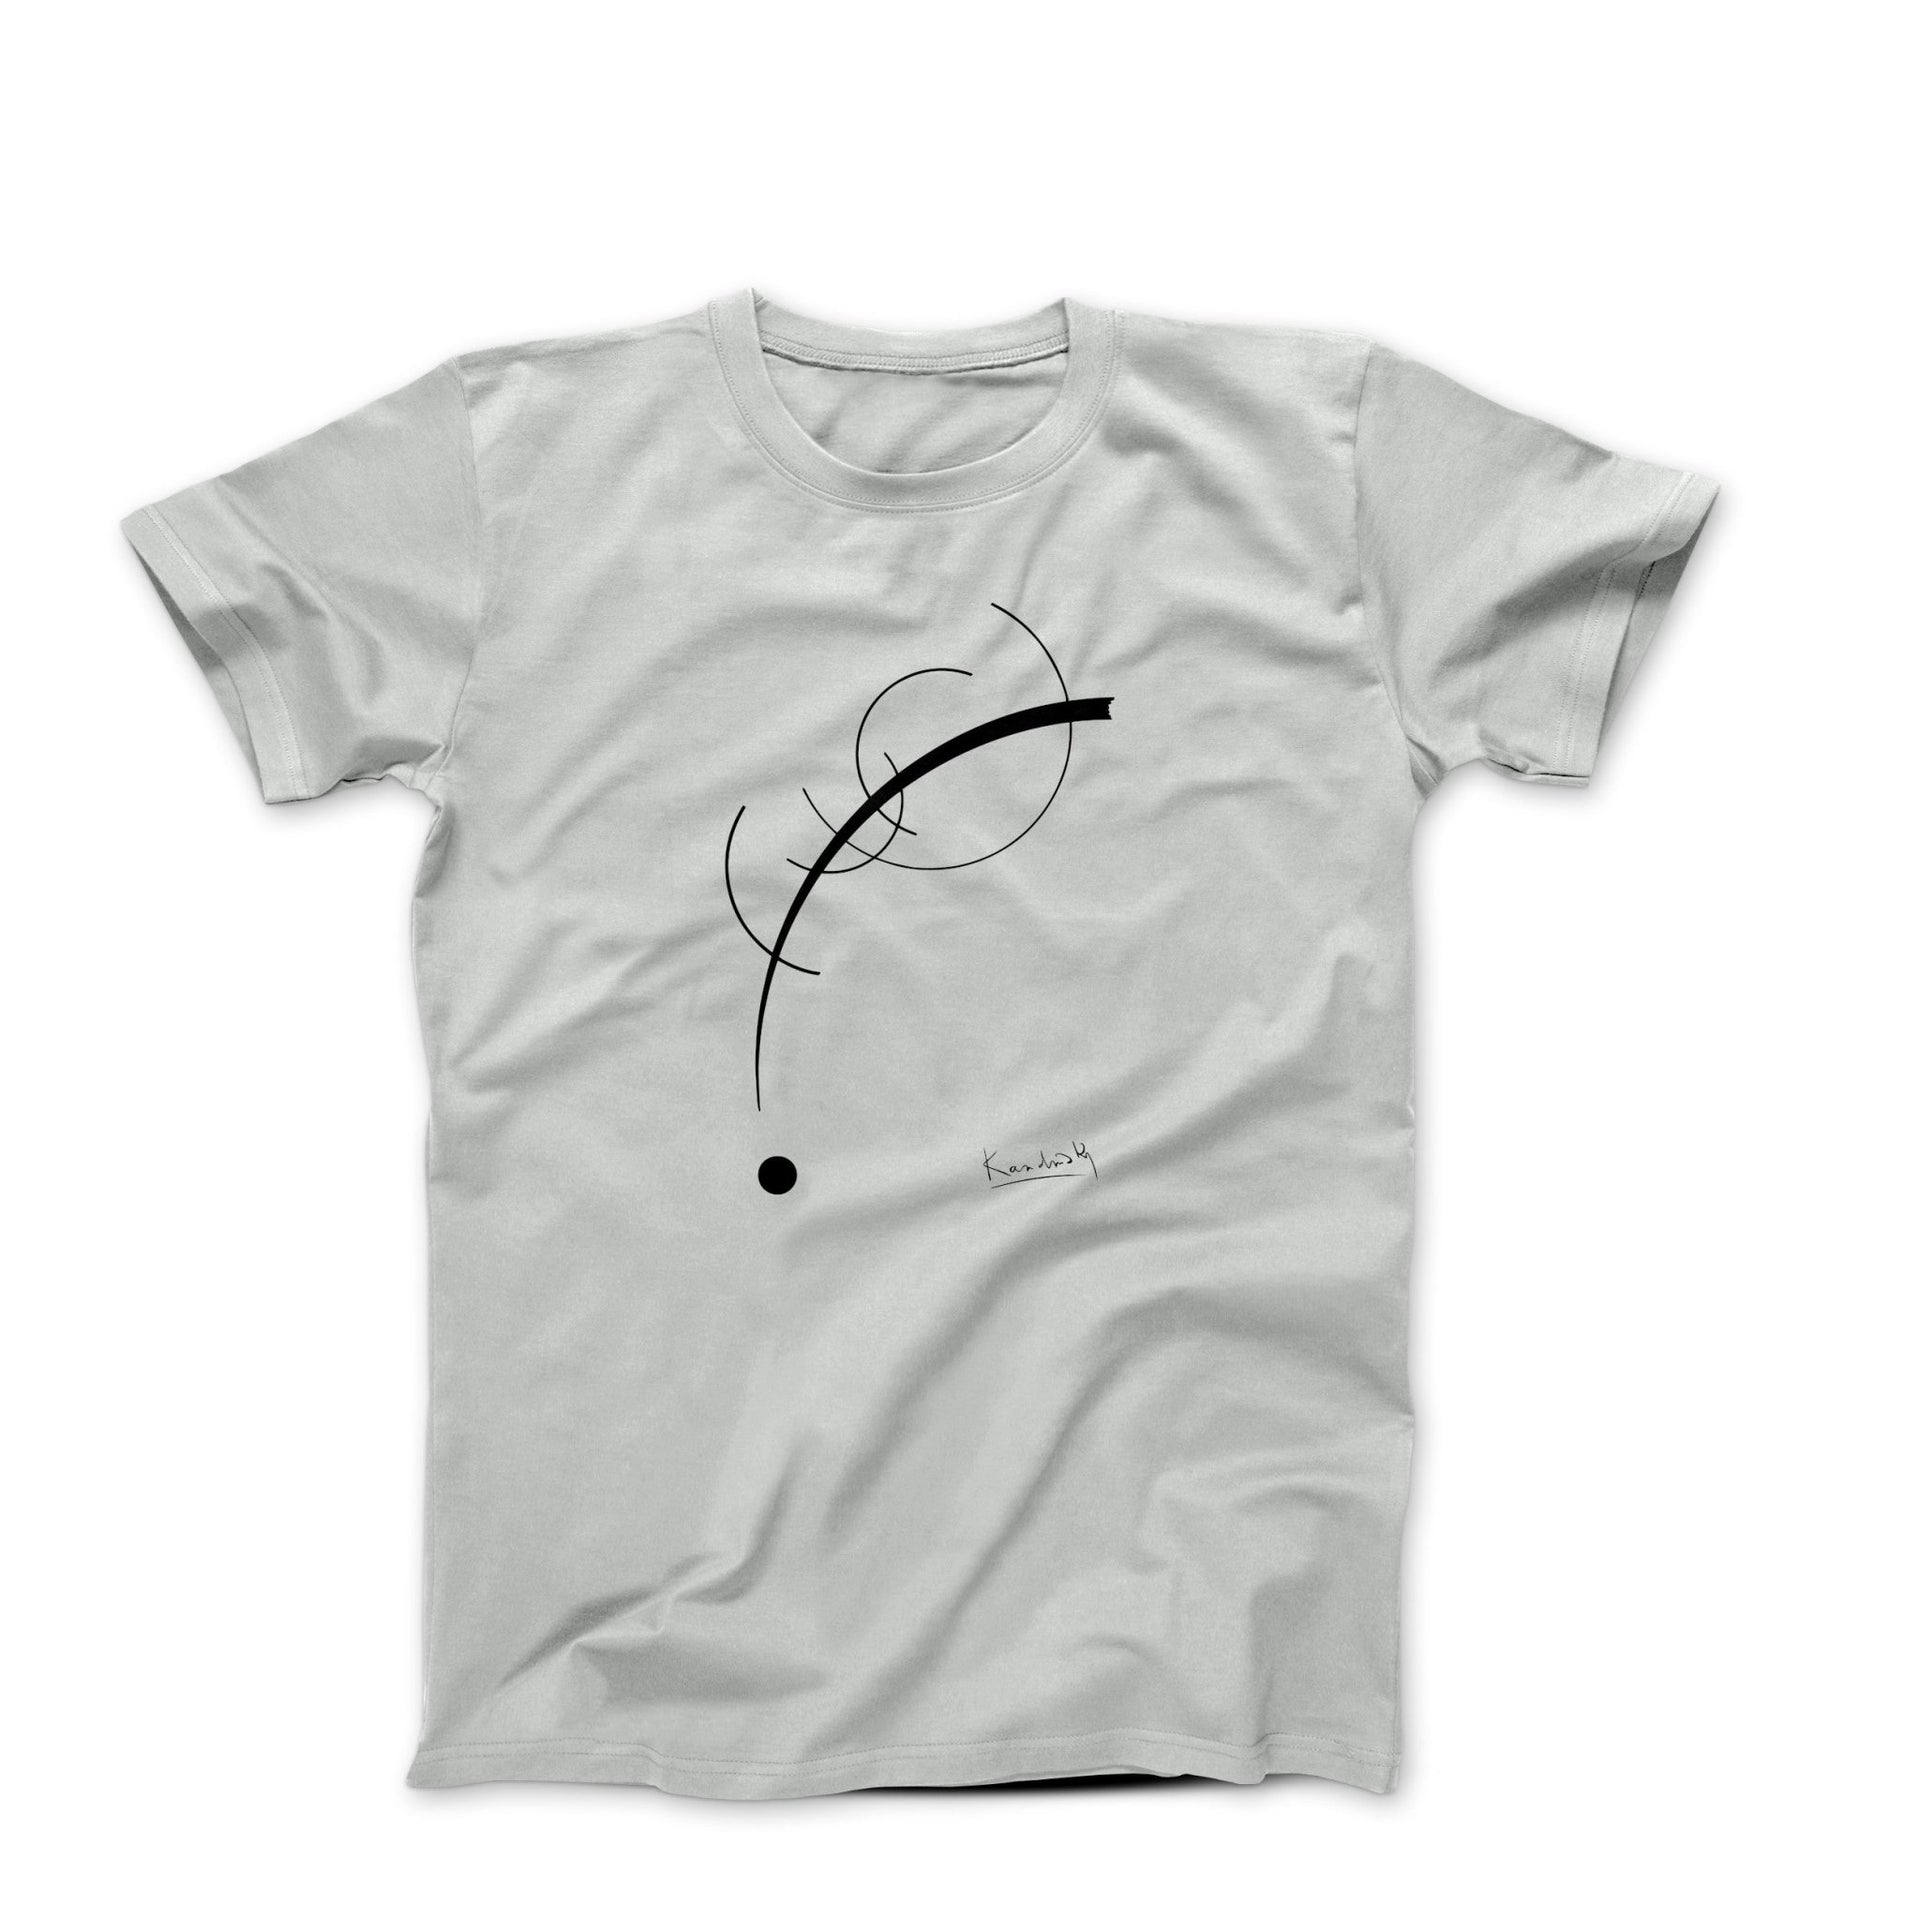 Wassily Kandinsky Free Curve To A Point (1925) Artwork T-shirt - Clothing - Harvey Ltd